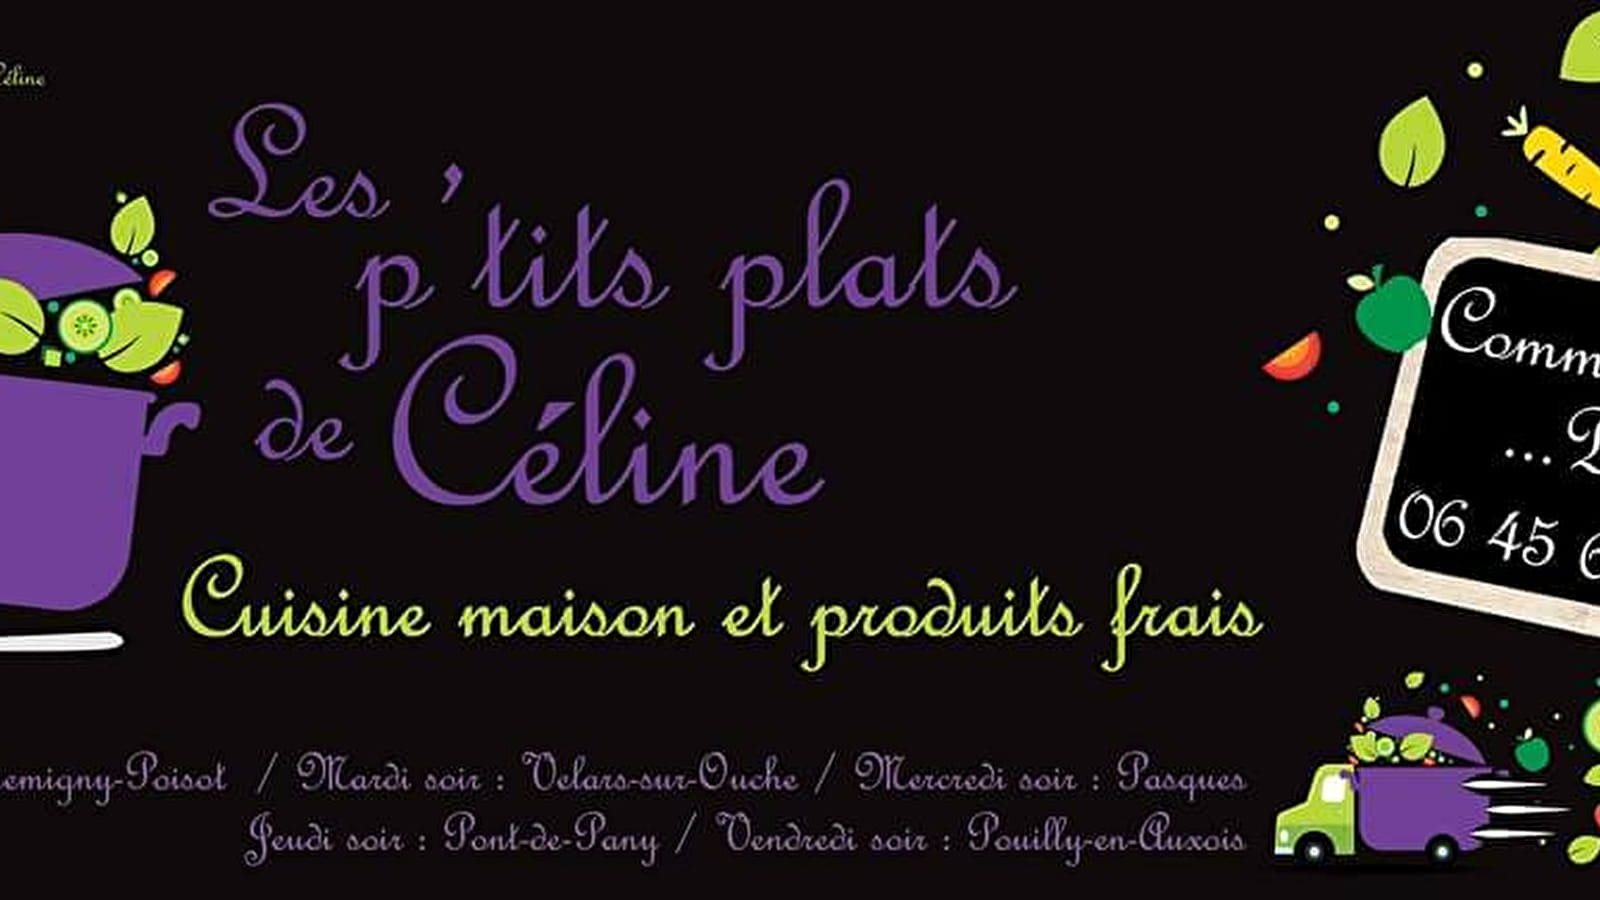 Les p'tits plats de Céline